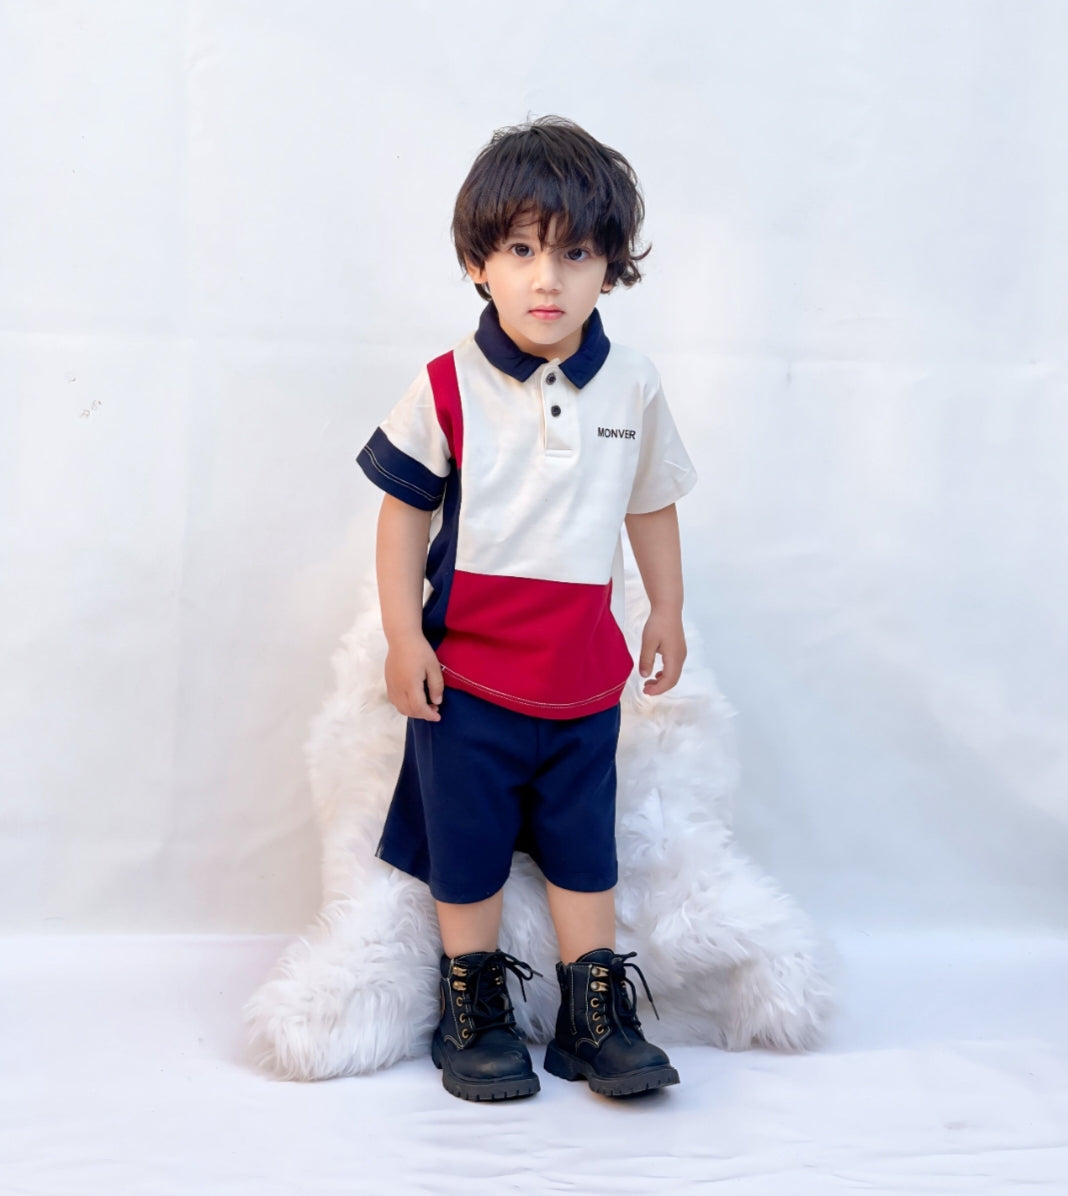 Plush-Baby Plaid Polo Shirt & Shorts-White